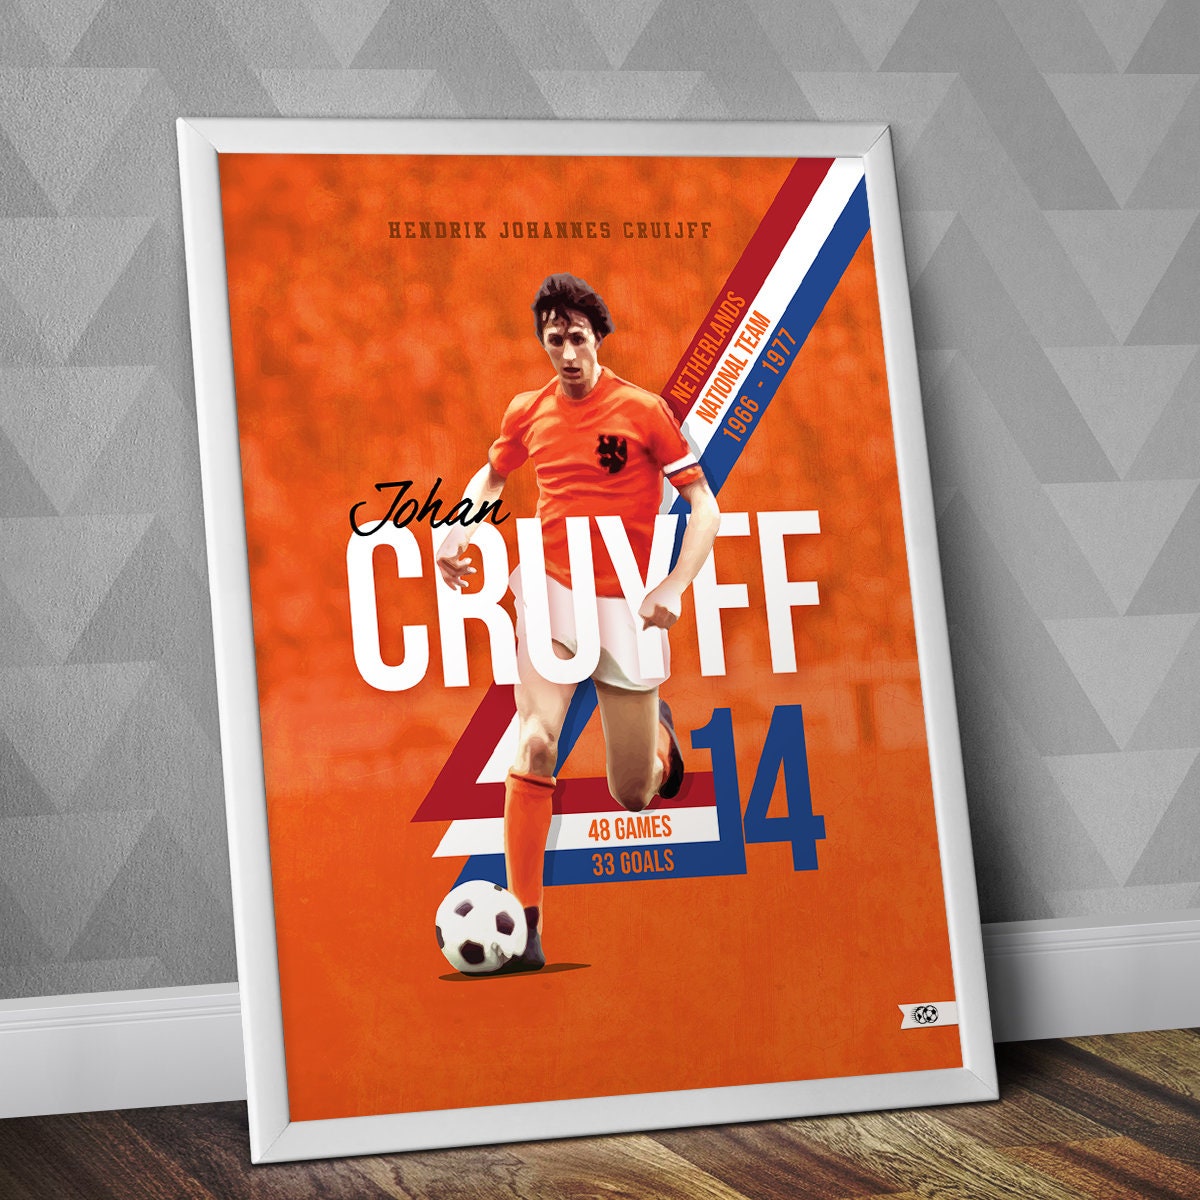 Johan Cruyff historical Netherlands jersey